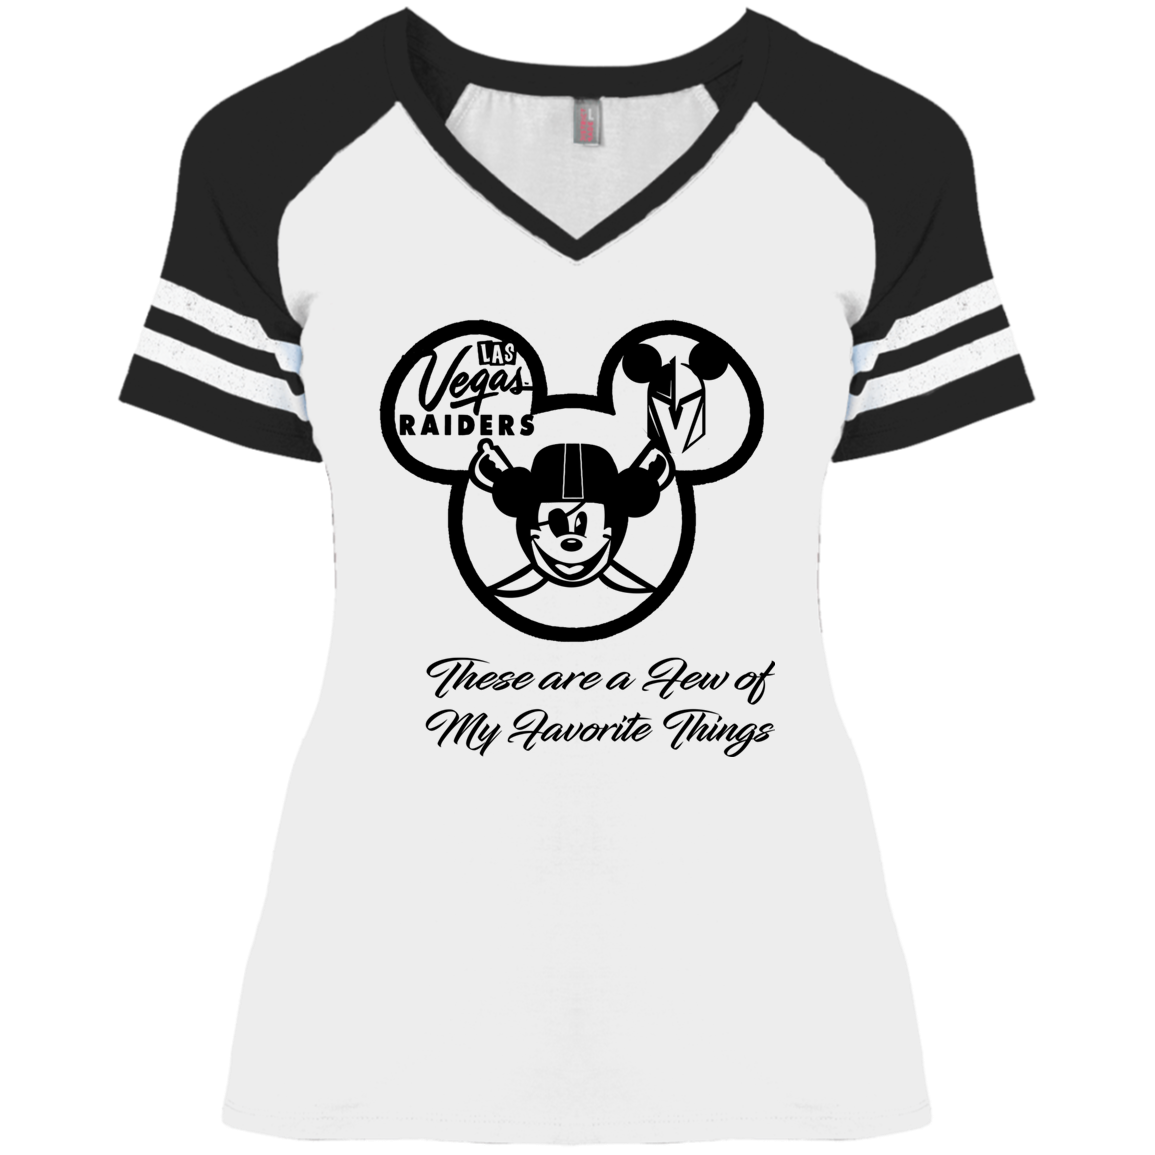 ArtichokeUSA Custom Design. Las Vegas Raiders & Mickey Mouse Mash Up. Fan Art. Parody. Ladies' Game V-Neck T-Shirt